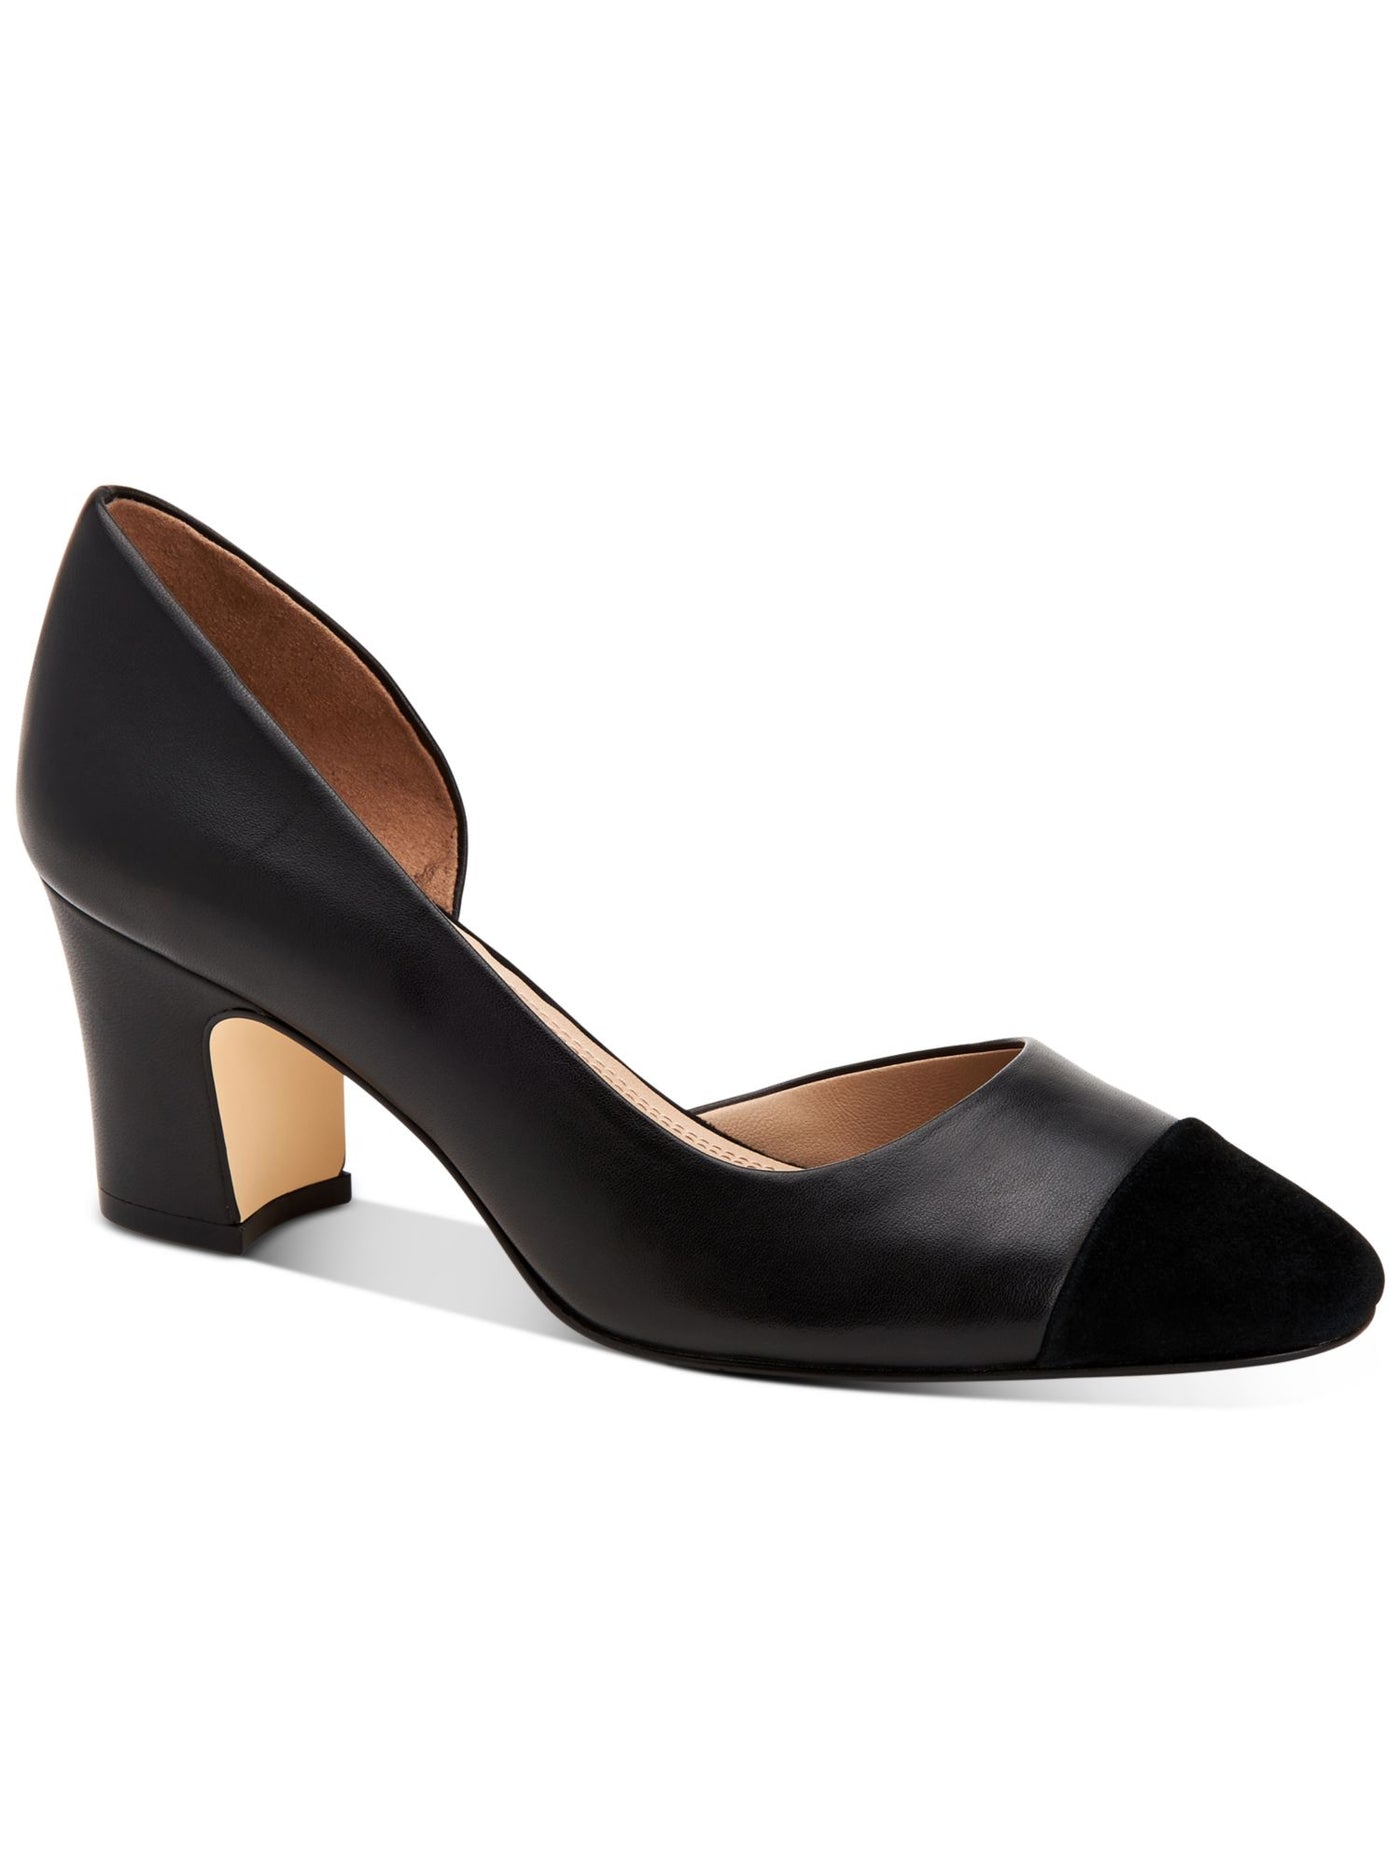 CHARTER CLUB Womens Black Cap Toe D'orsay Brandiee Almond Toe Block Heel Slip On Leather Dress Pumps Shoes 10 M